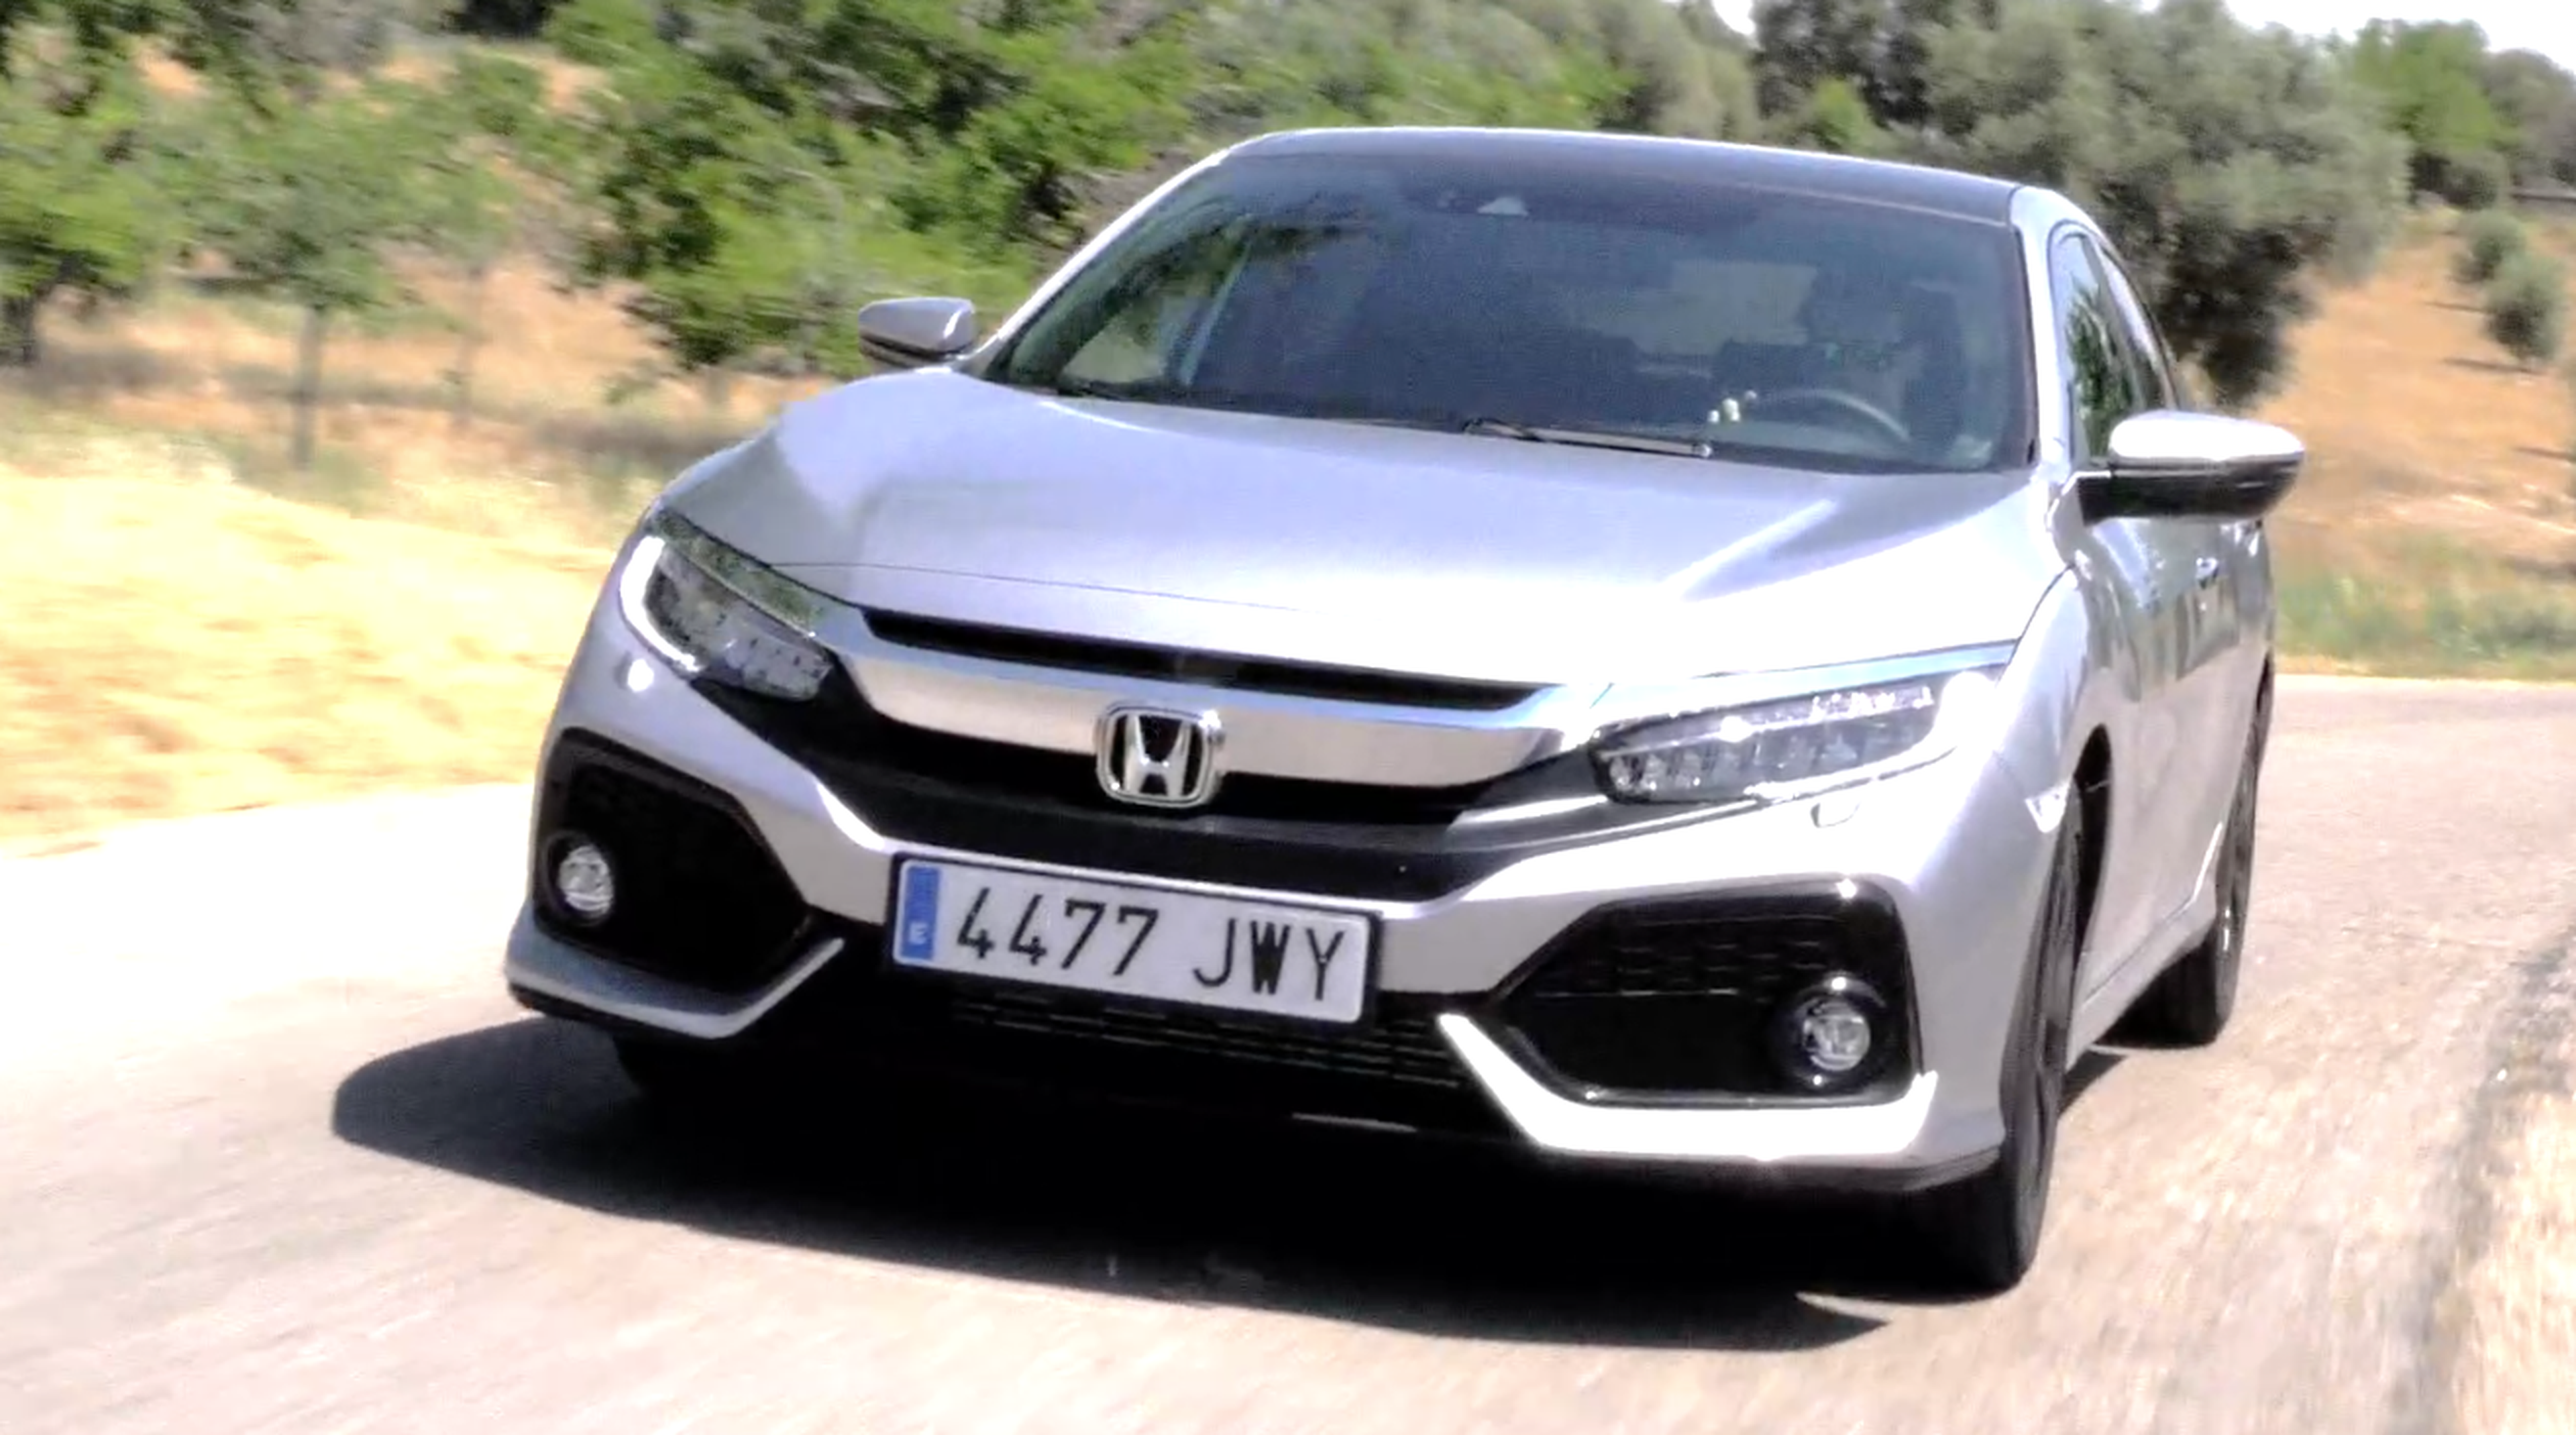 VÍDEO: Prueba del Honda Civic 2017